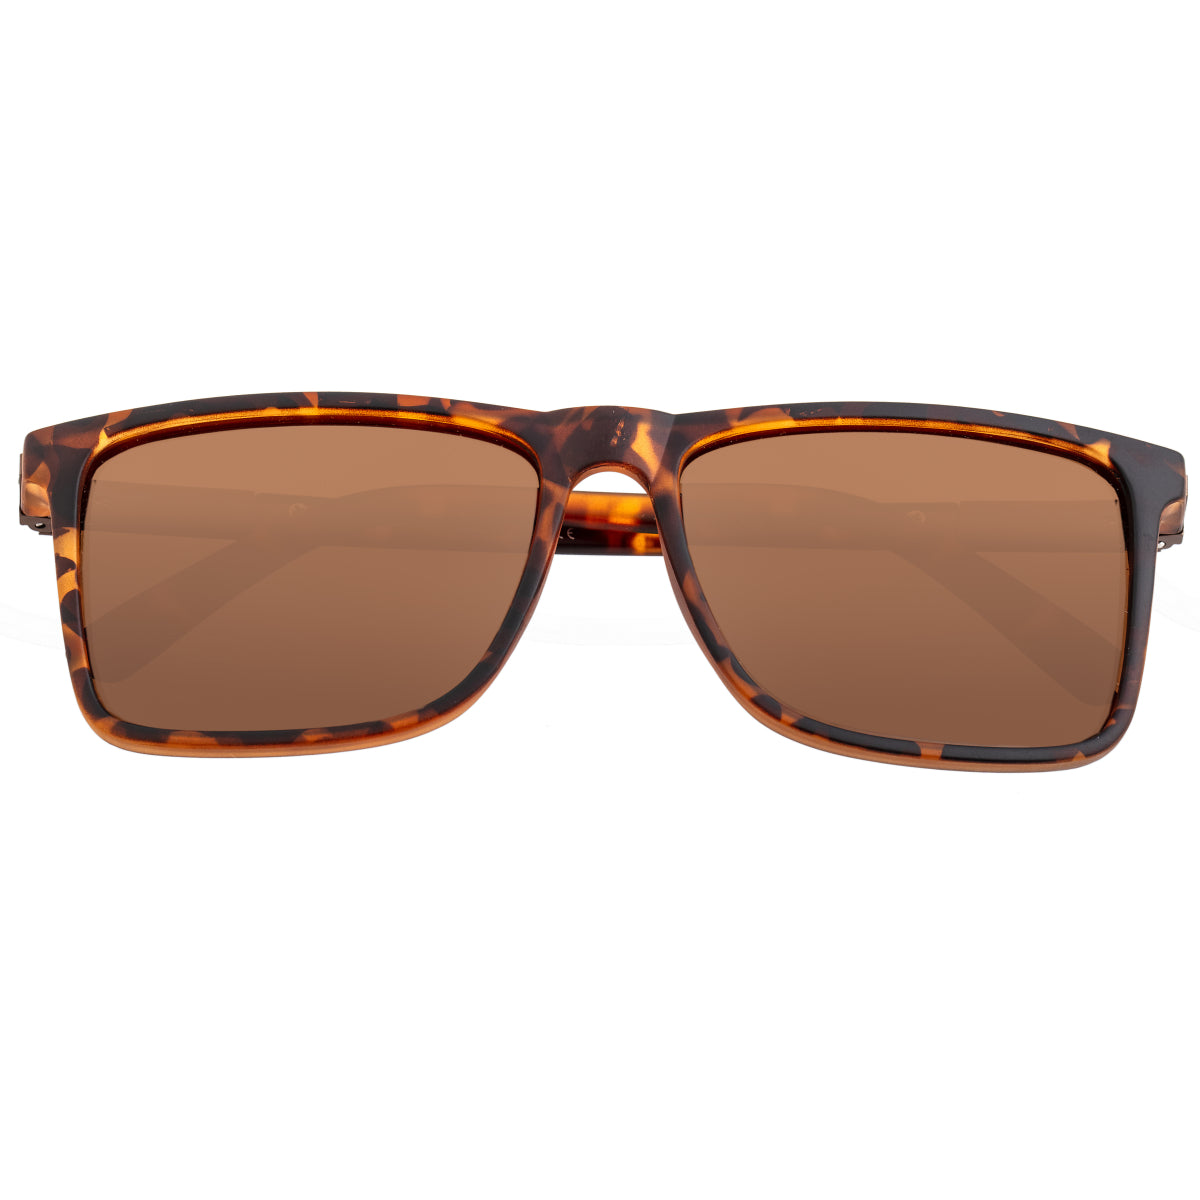 Breed Caelum Polarized Sunglasses - Tortoise/Brown - BSG063BN